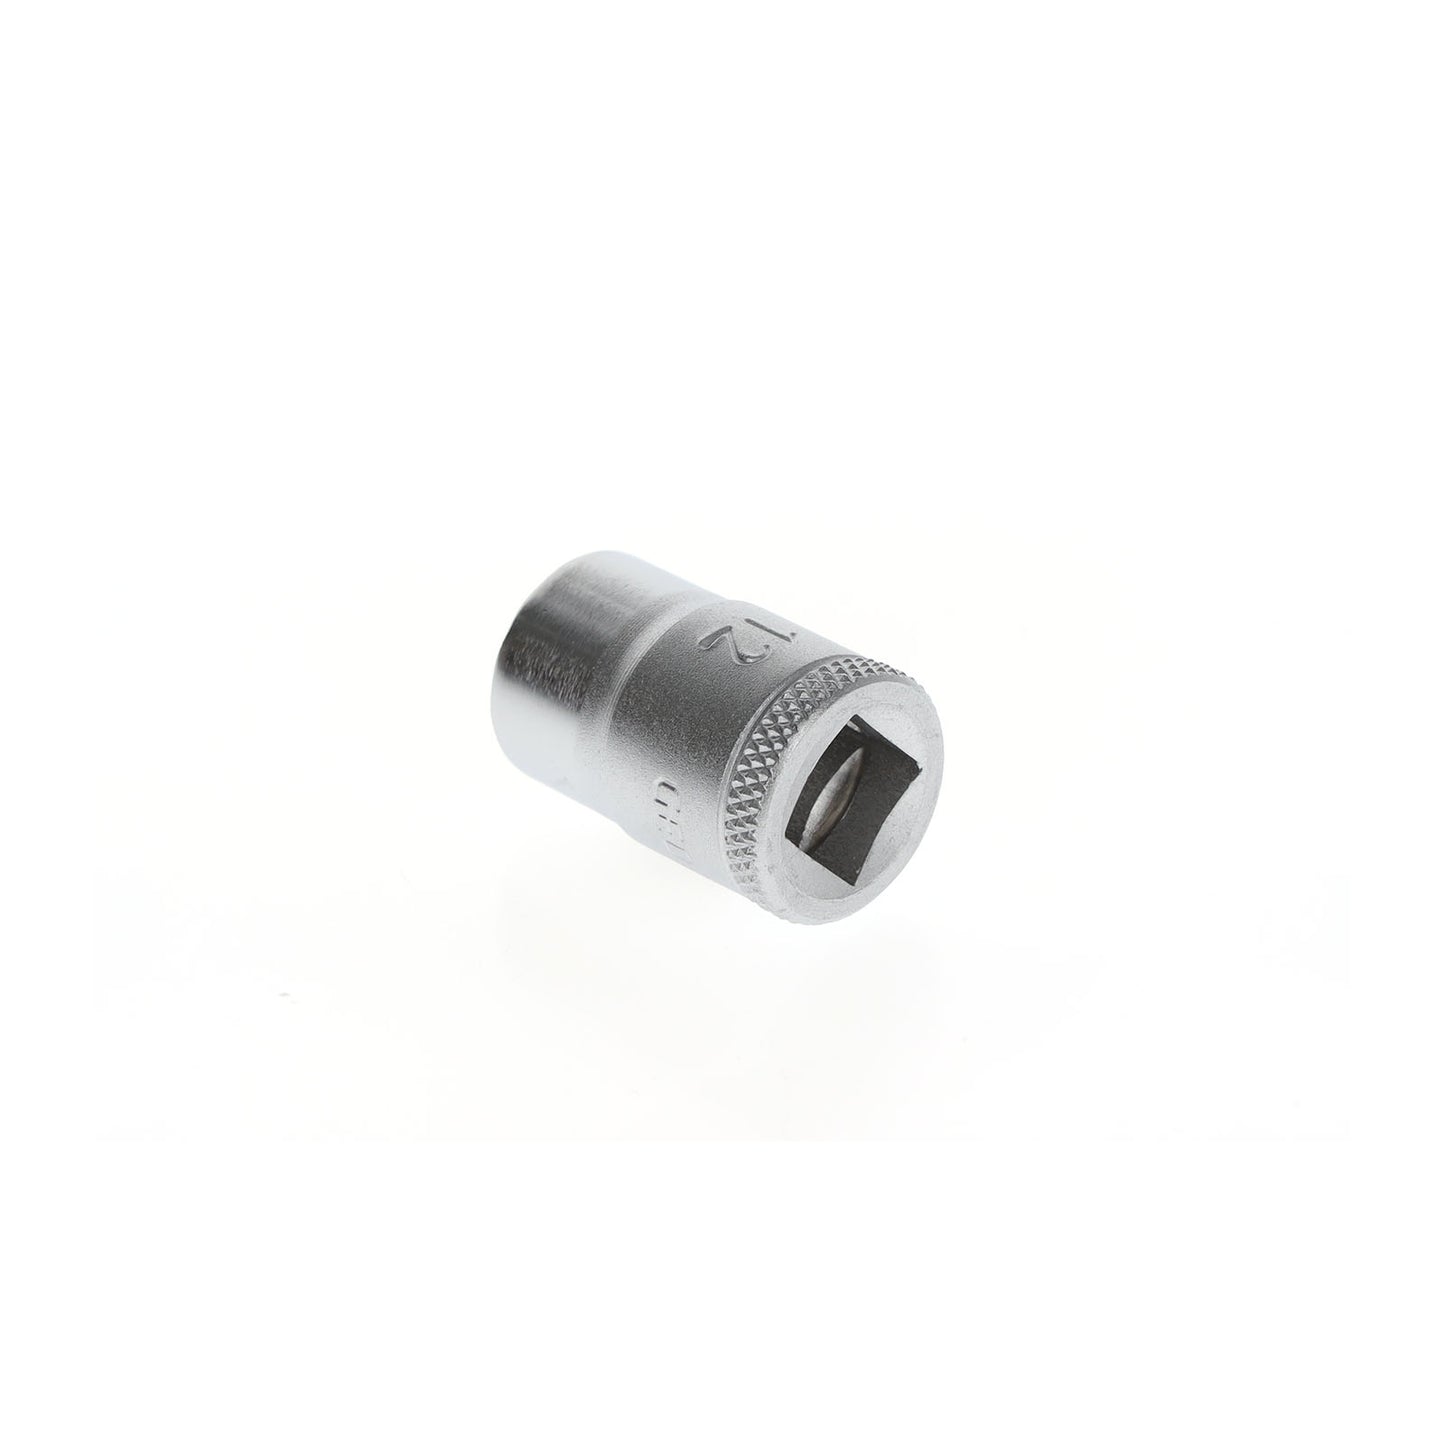 GEDORE D 30 12 - Unit Drive Socket 3/8", 12 mm (6230750)